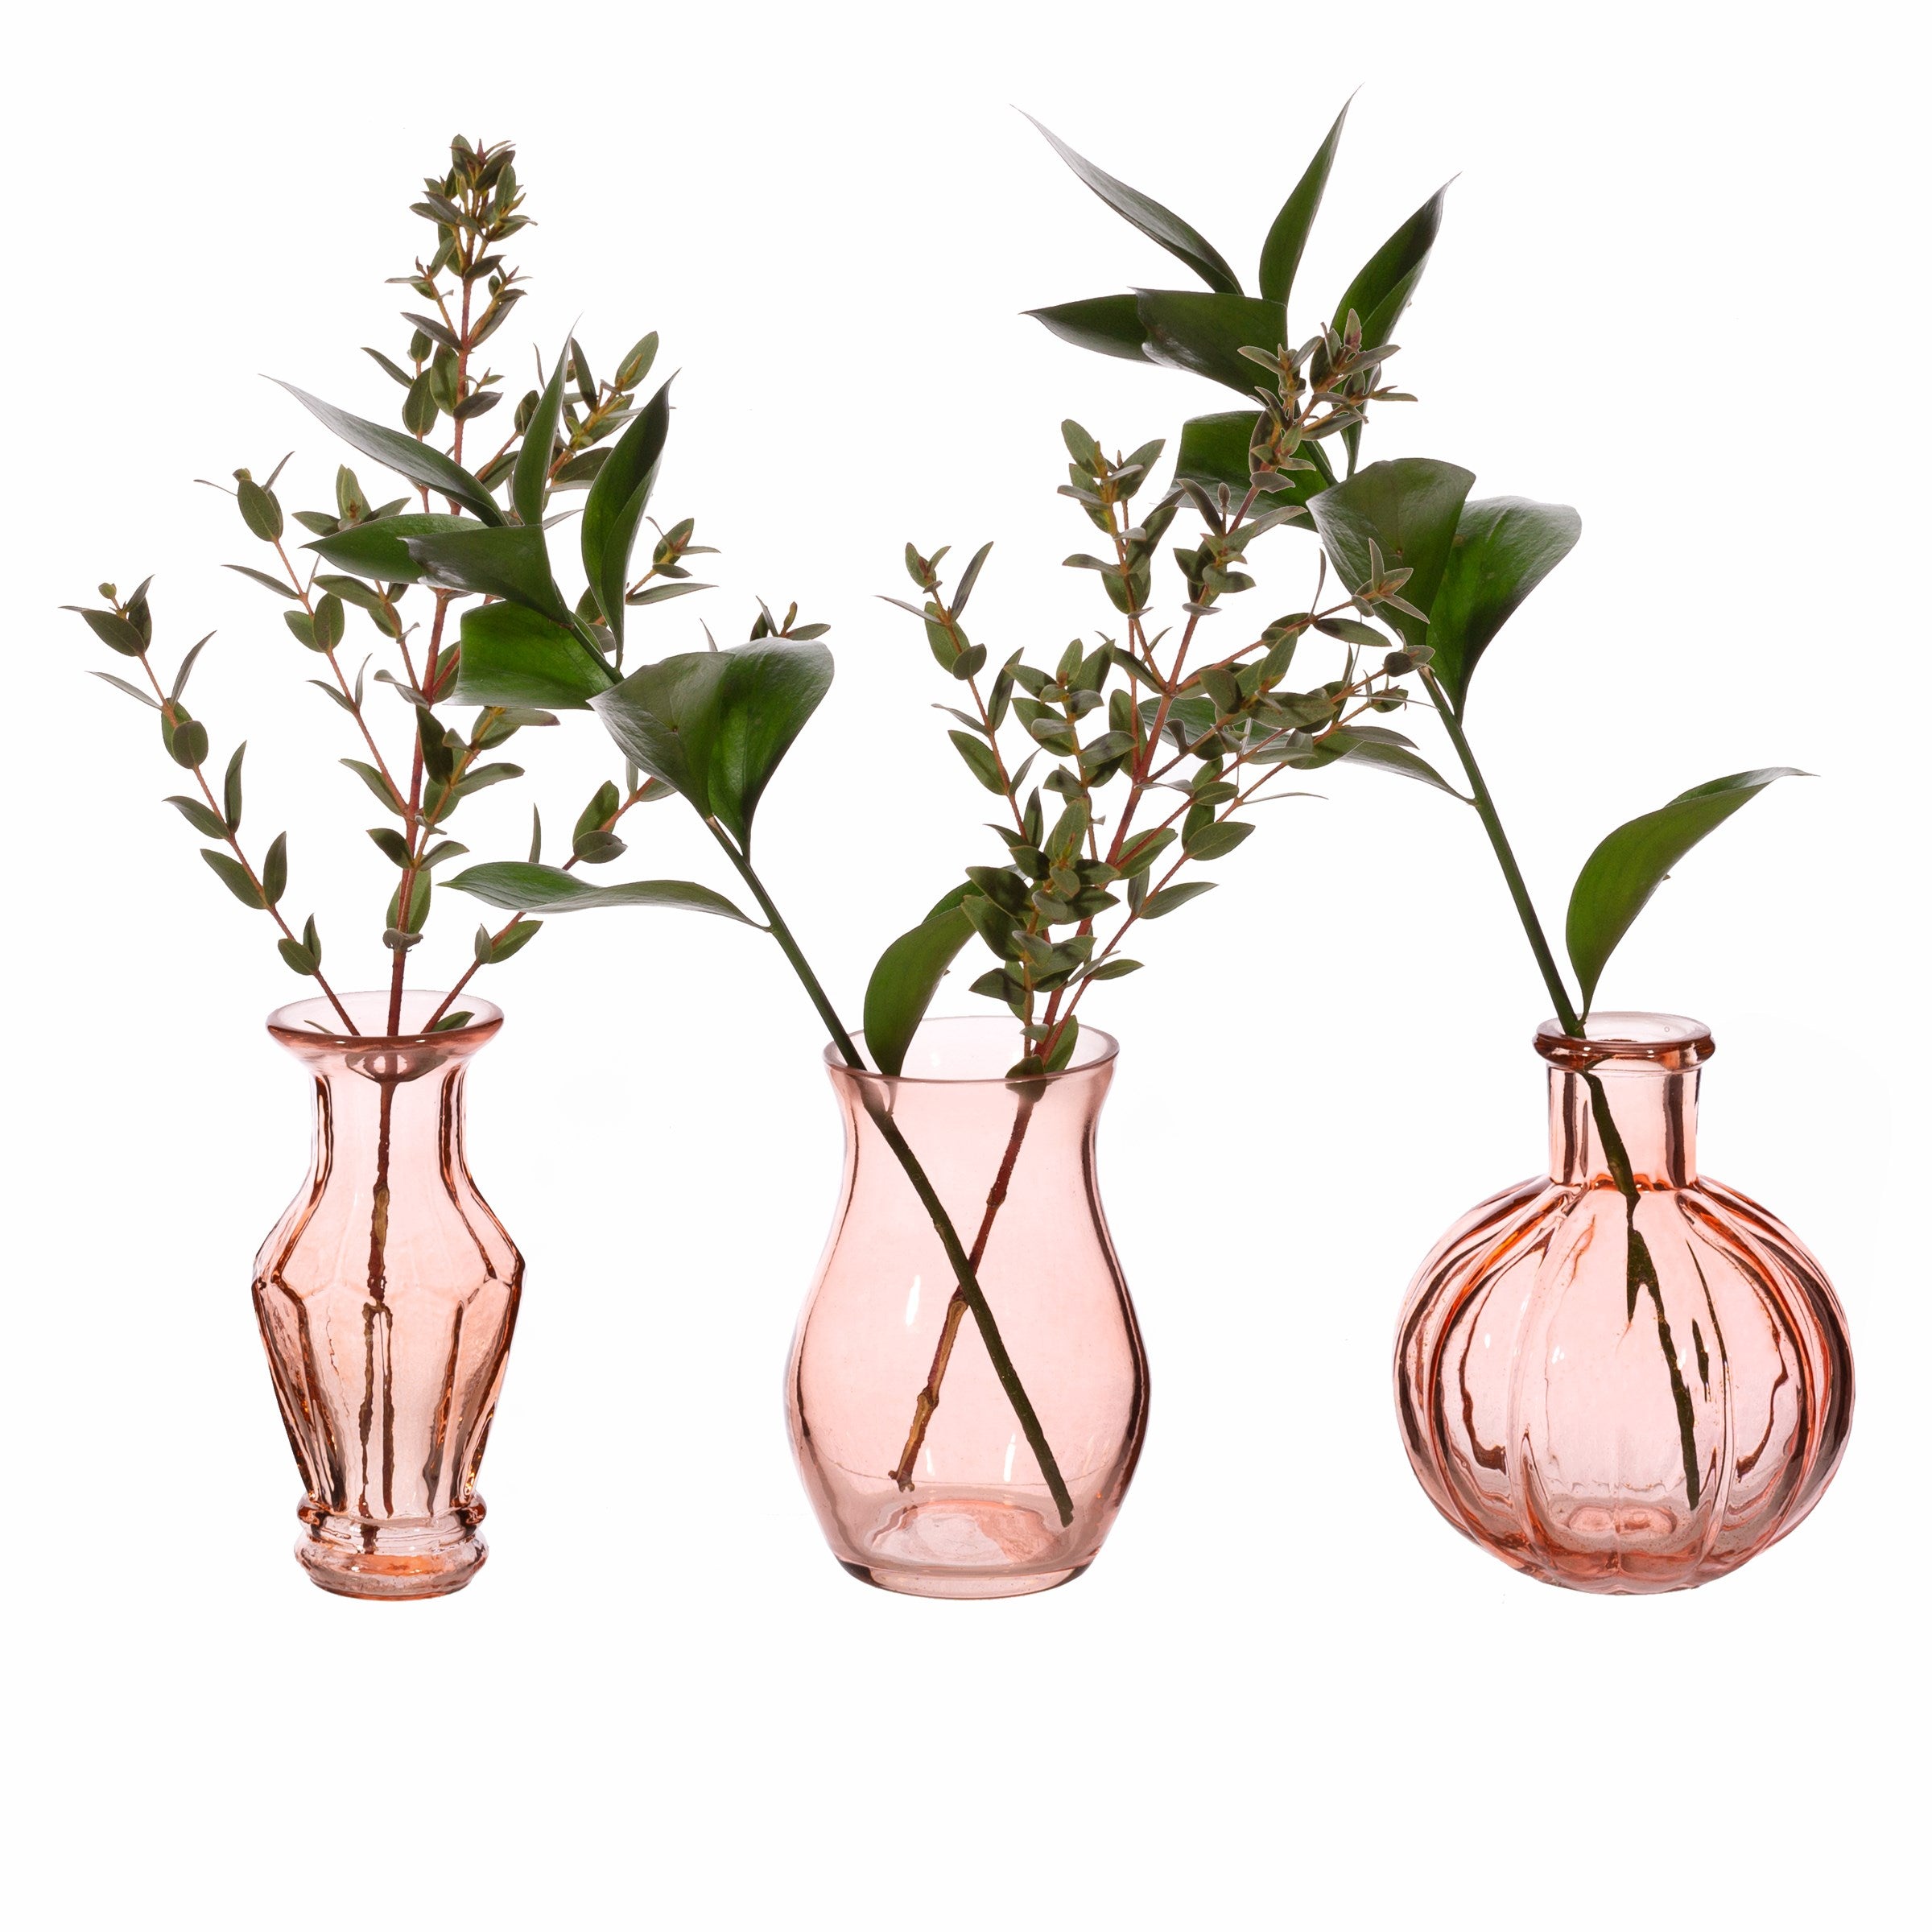 Recycled glass vintage bud vase-set of 3 in pale blue/pink